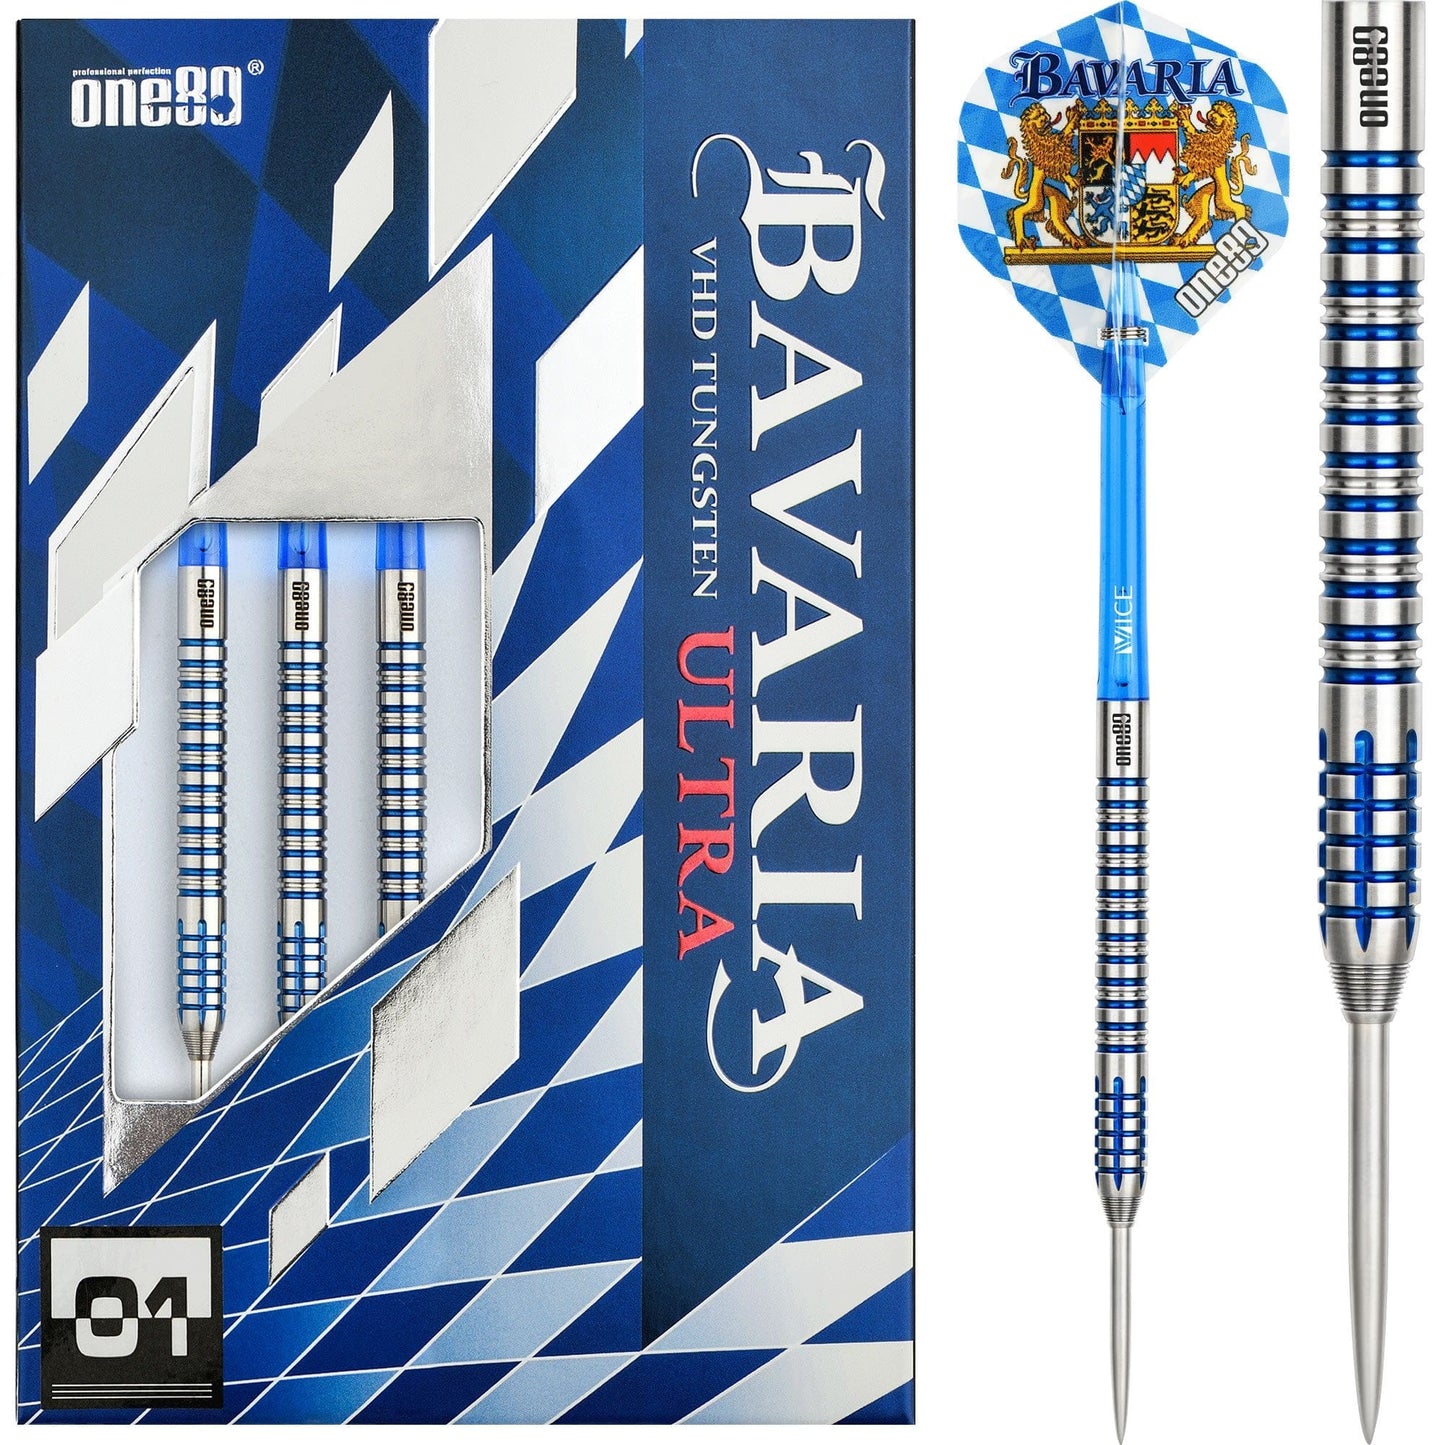 One80 Bavaria Ultra Long Darts - Steel Tip - S01 - Blue 21g